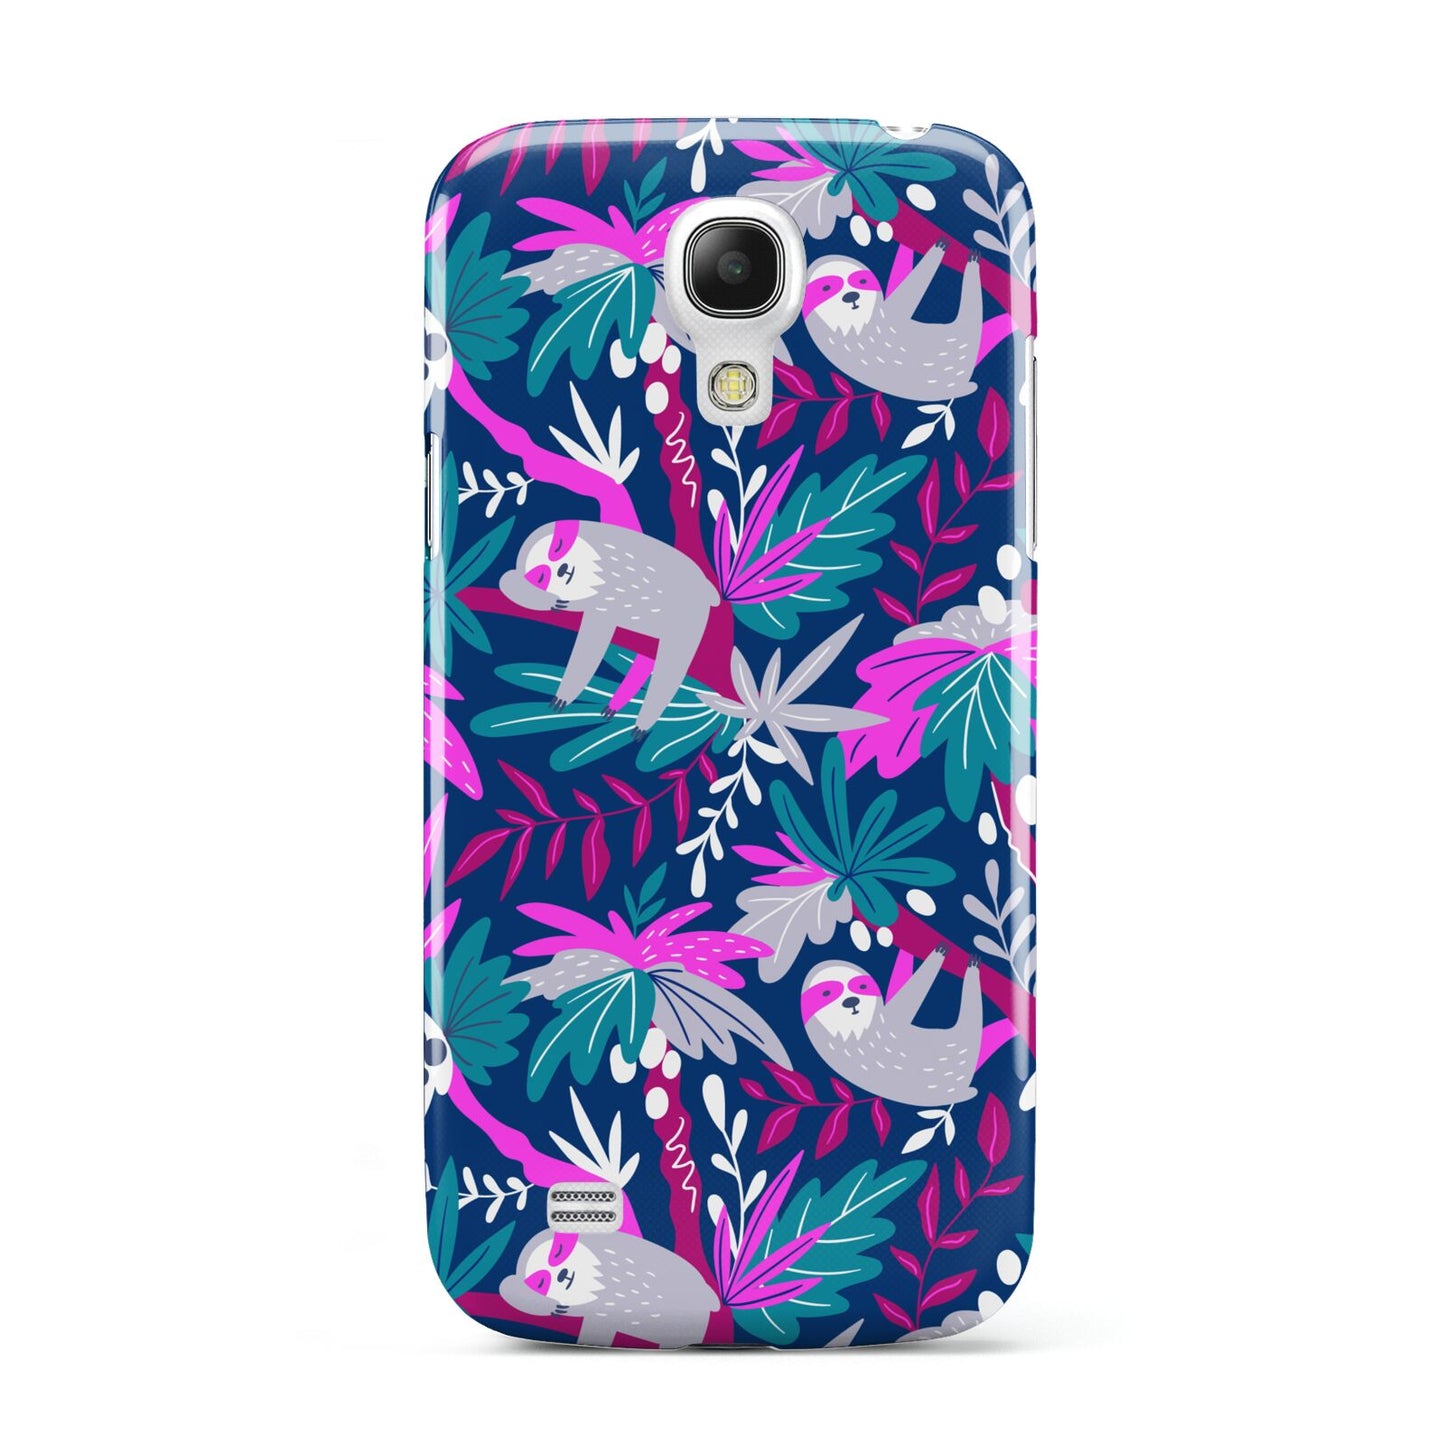 Sloth Samsung Galaxy S4 Mini Case